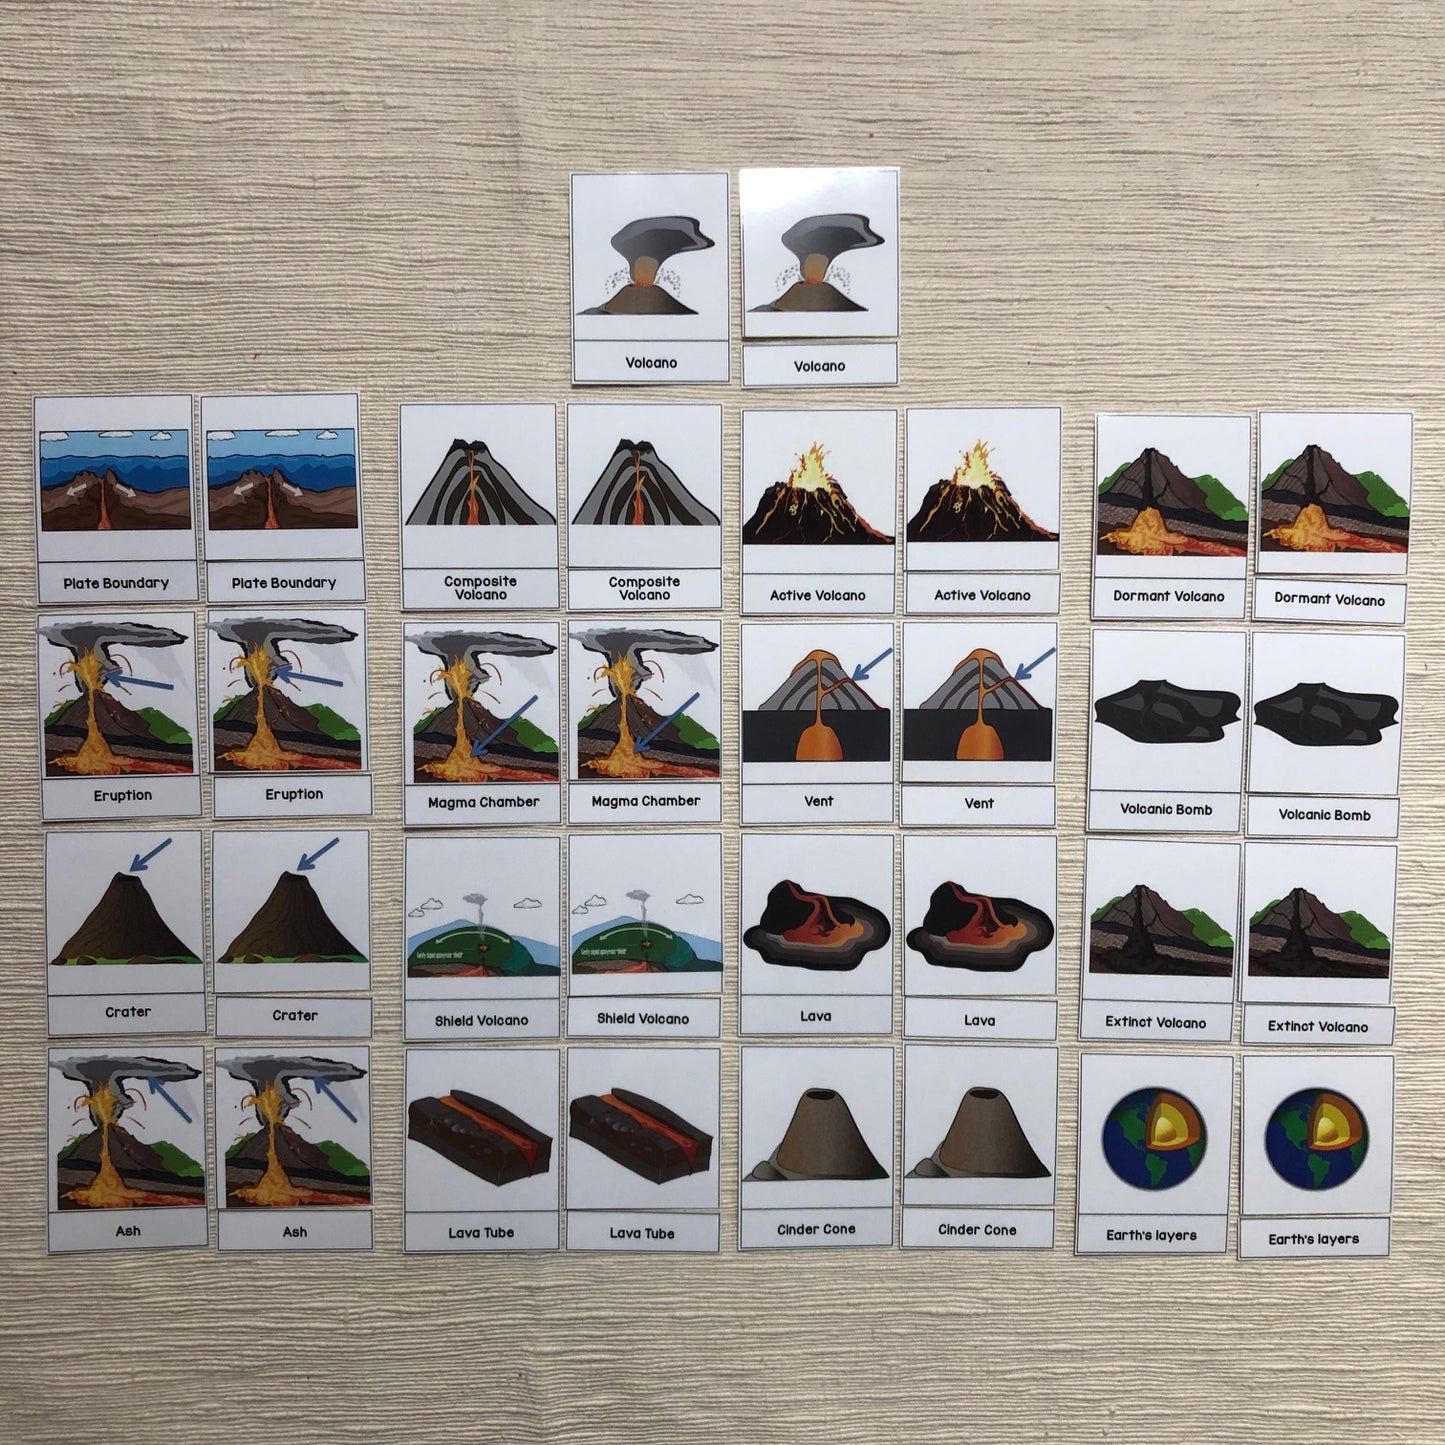 Volcano Vocabulary Cards (nomenclature) - montessorikiwi